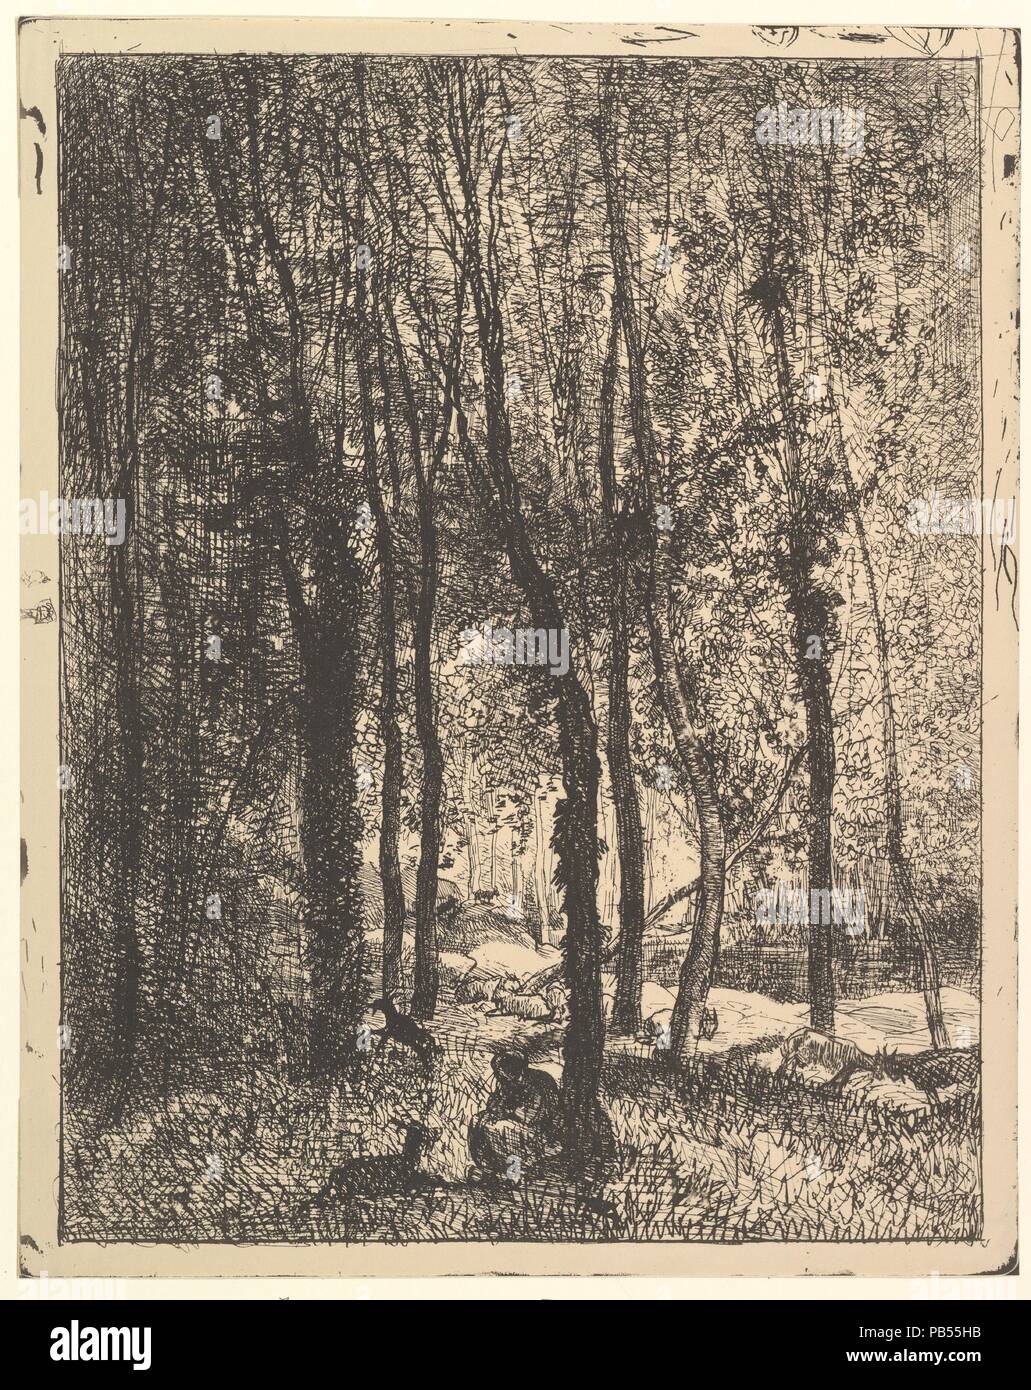 The Goatherd. Artist: Charles-François Daubigny (French, Paris 1817-1878 Paris). Dimensions: image: 13 1/2 x 10 1/2 in. (34.3 x 26.7 cm)  sheet: 14 1/4 x 11 3/8 in. (36.2 x 28.9 cm). Publisher: Maurice Le Garrec (French, 1881-1937). Series/Portfolio: Le Garrec printing of 1921. Date: [1862] reprinted 1921. Museum: Metropolitan Museum of Art, New York, USA. Stock Photo